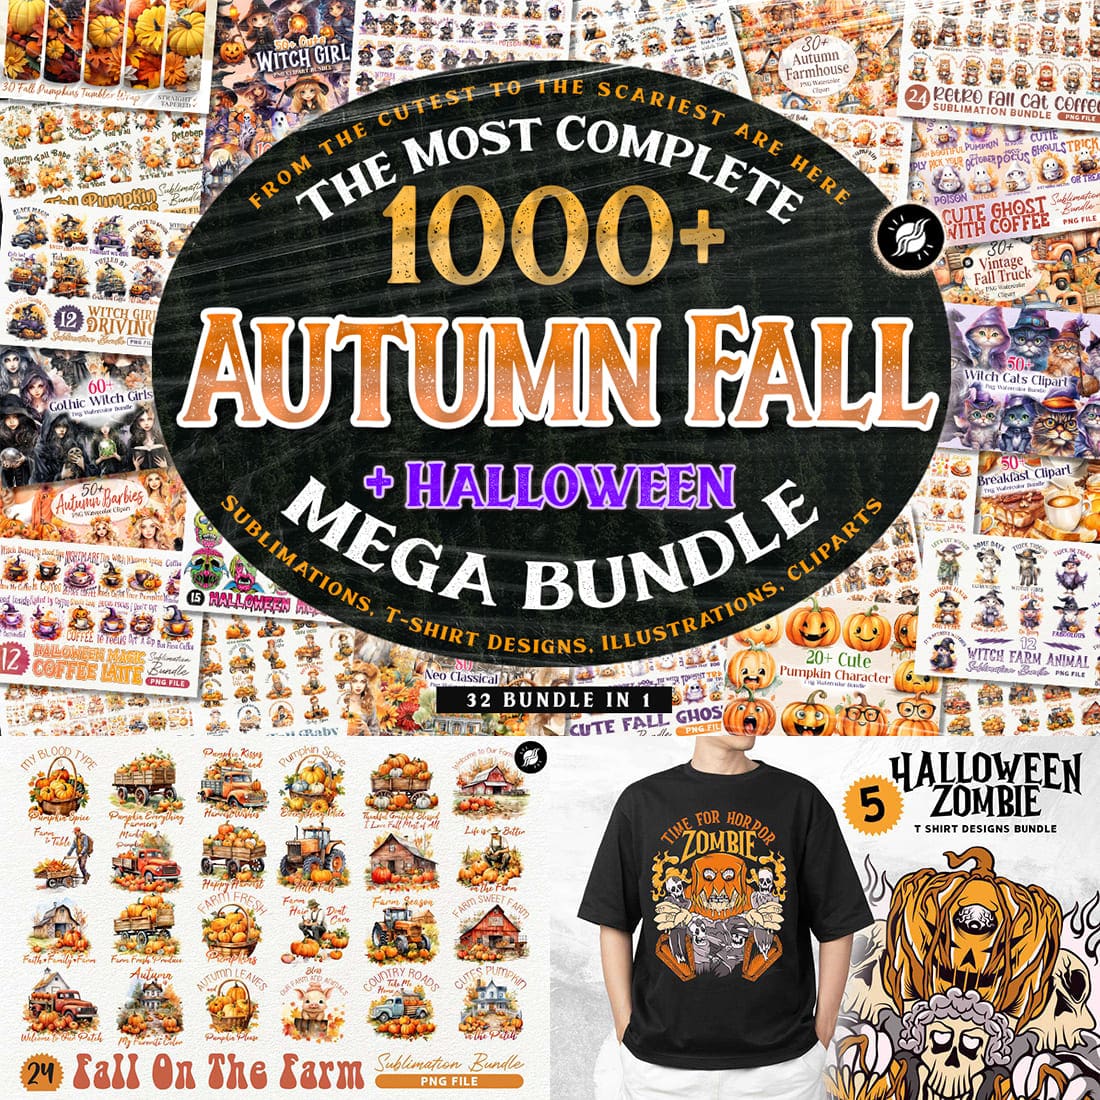 Autumn Fall Halloween Sublimation Designs Bundle cover image.